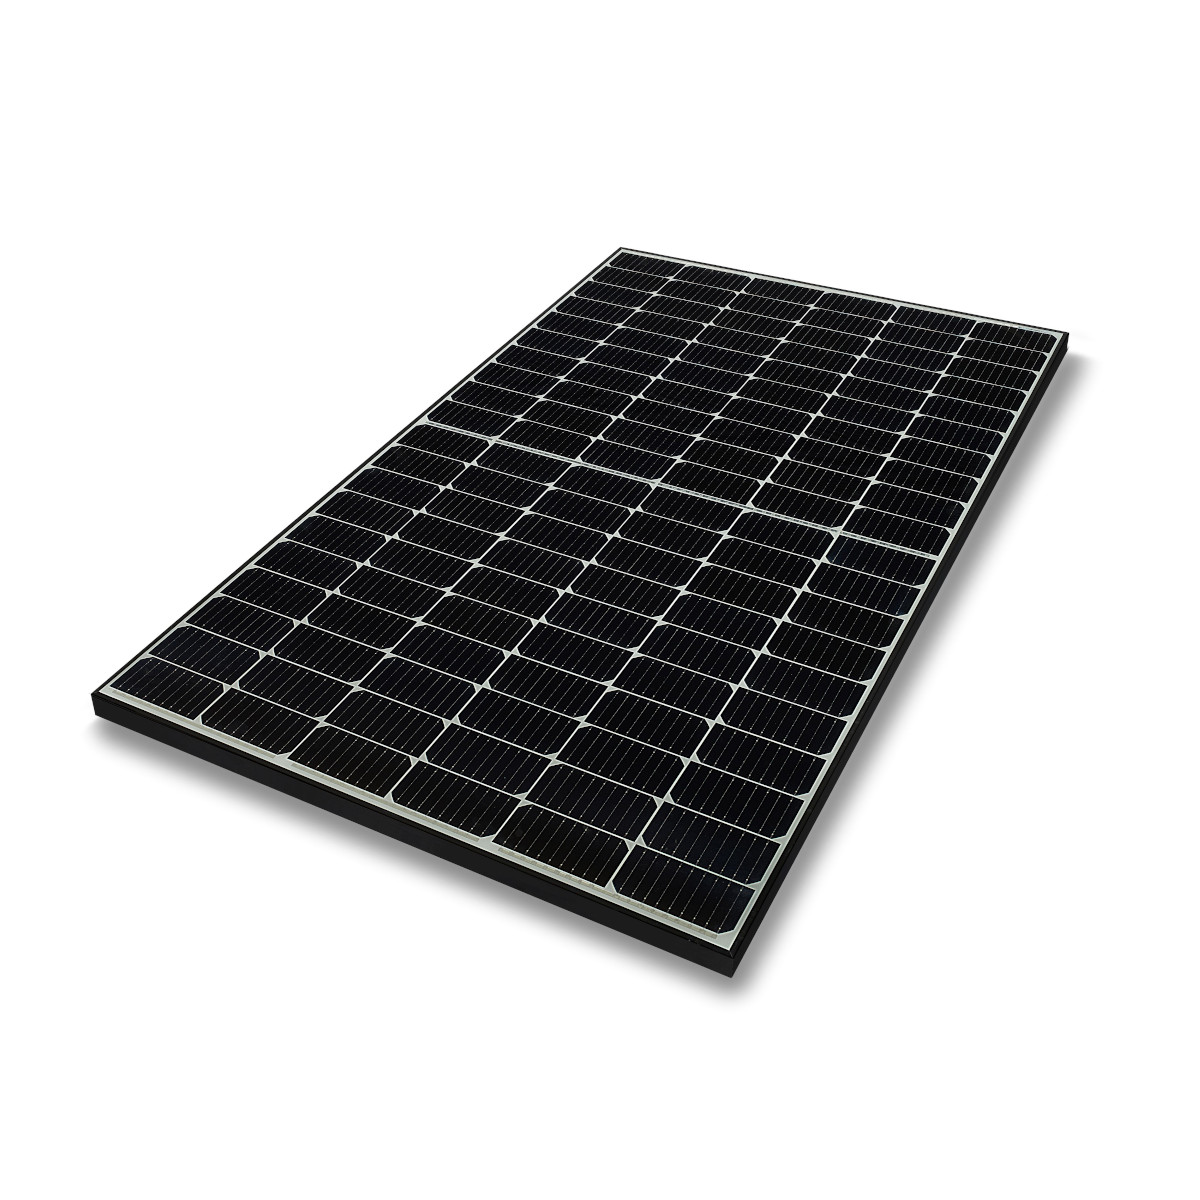 LG Solar LG390N1C-E6 NeON H